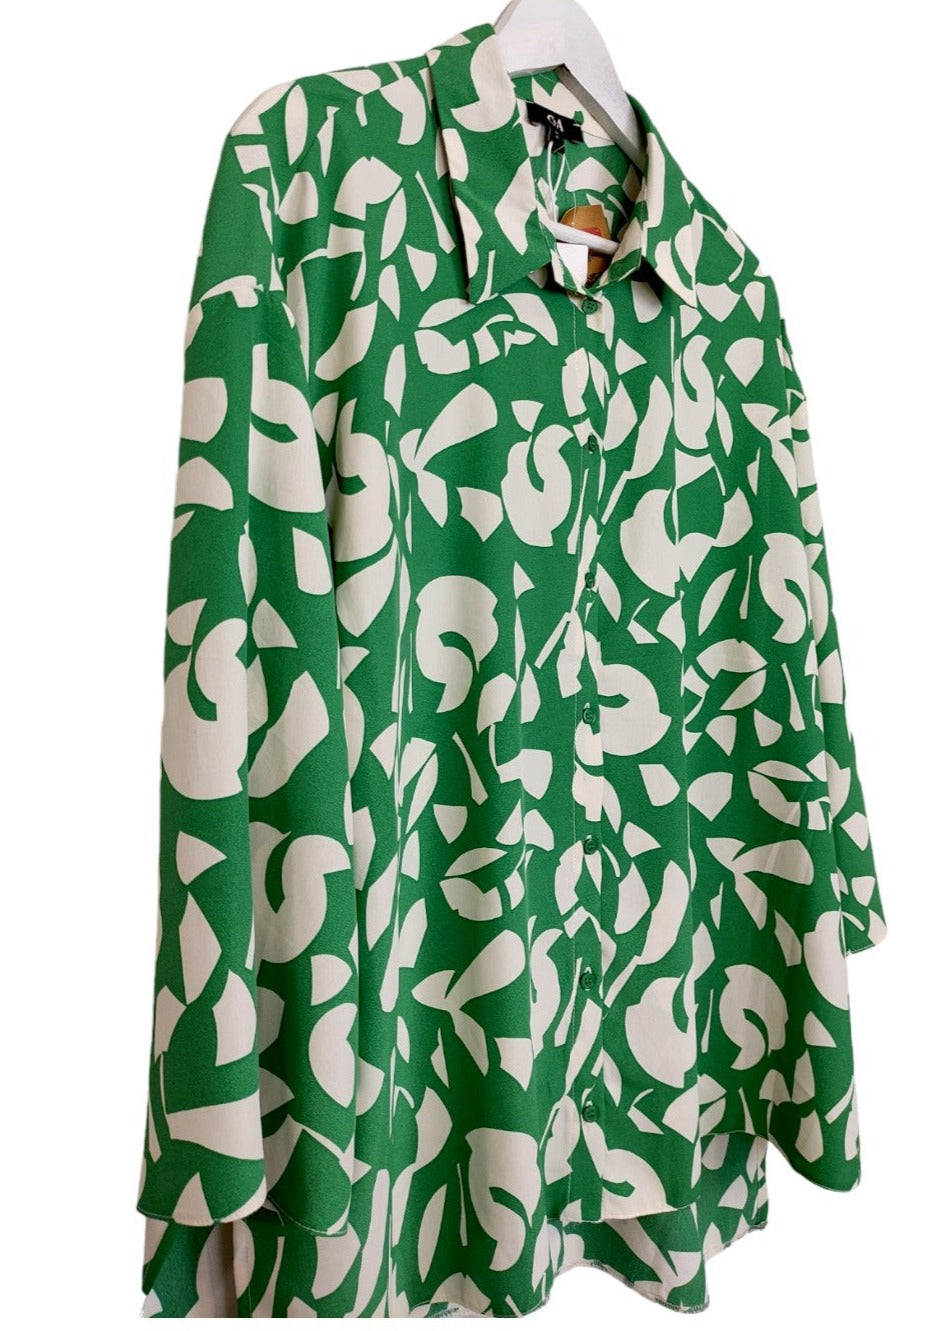 Stock, Εμπριμέ Γυναικεία Πουκαμίσα C&A σε Πράσινο-Λευκό Χρώμα (2XL)